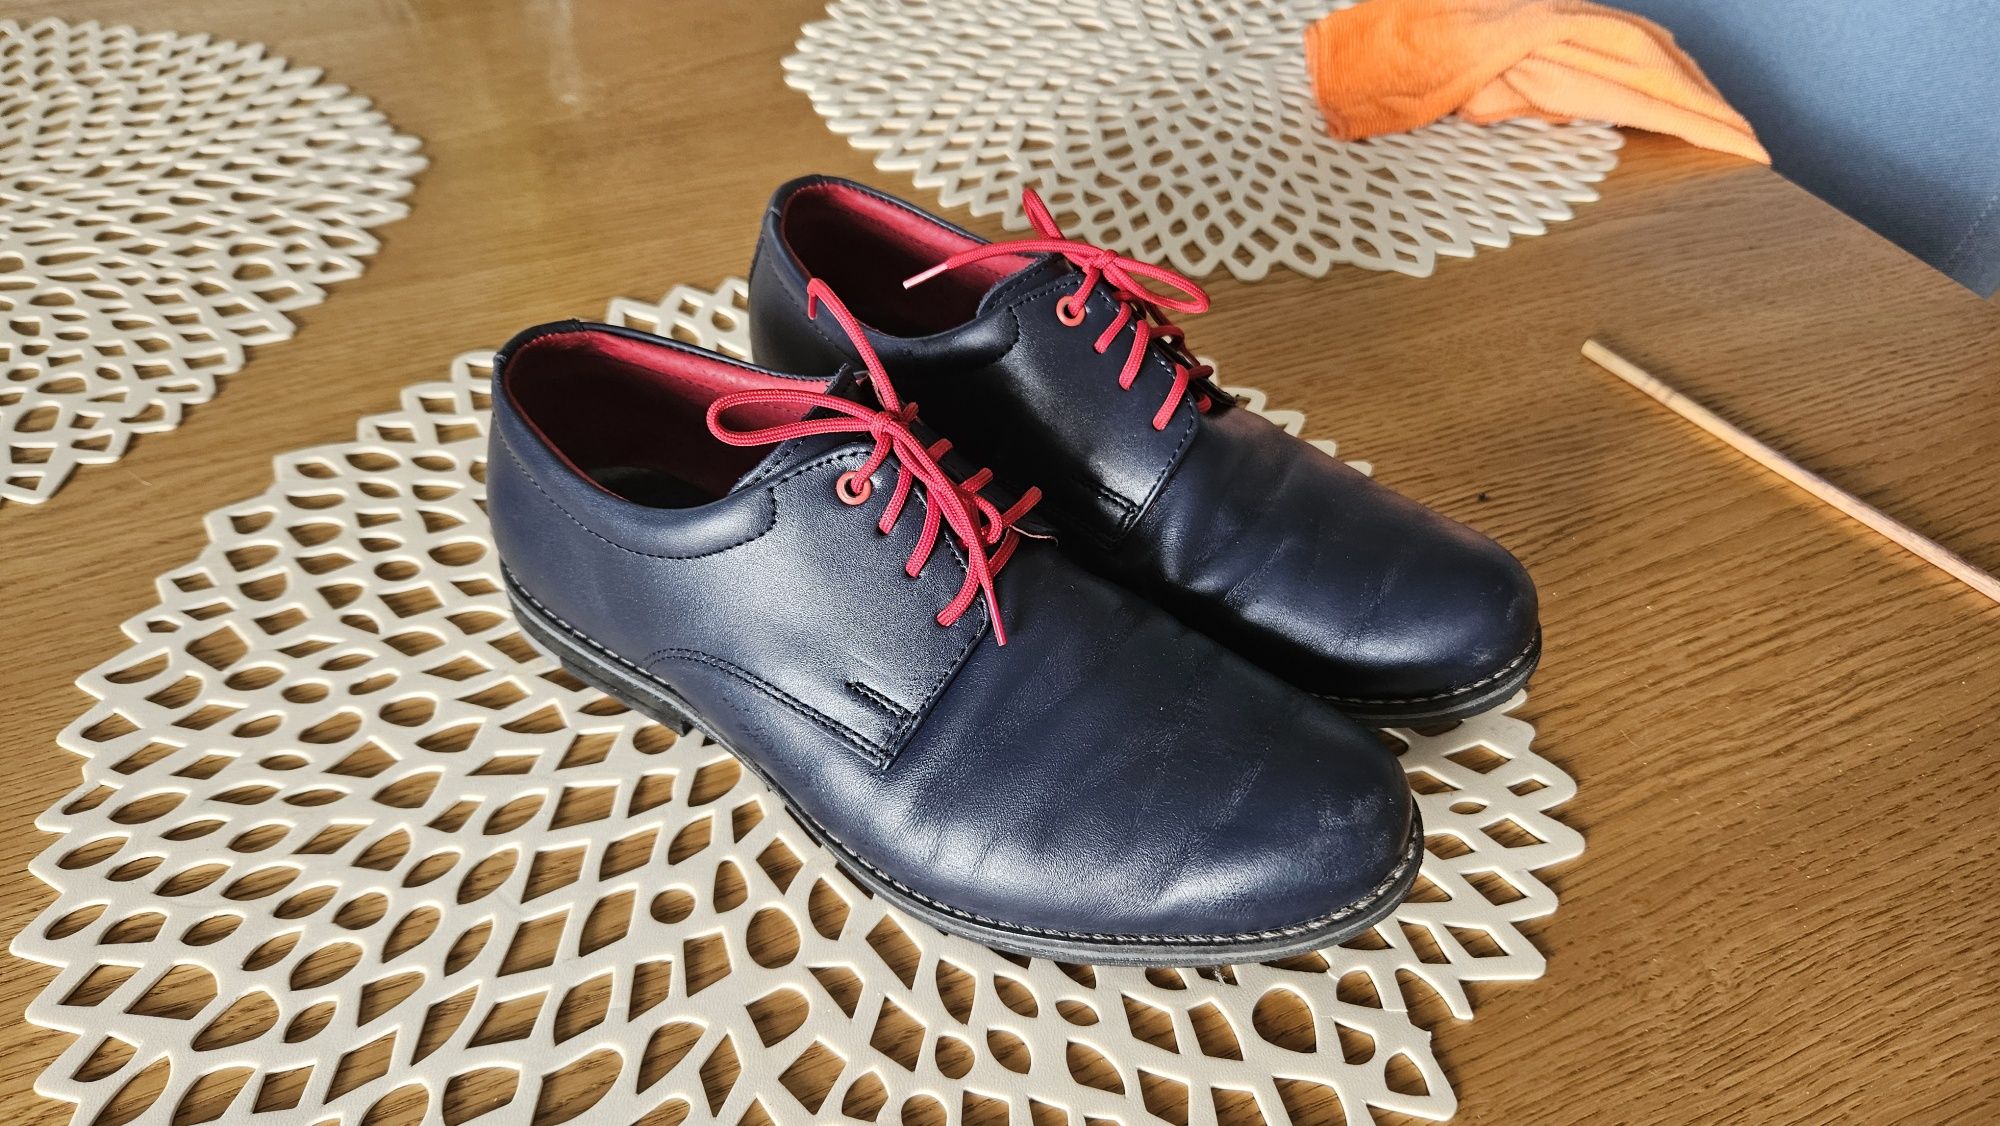 Pantofle buty granatowe komunijne rozmiar 35 22.5 cm